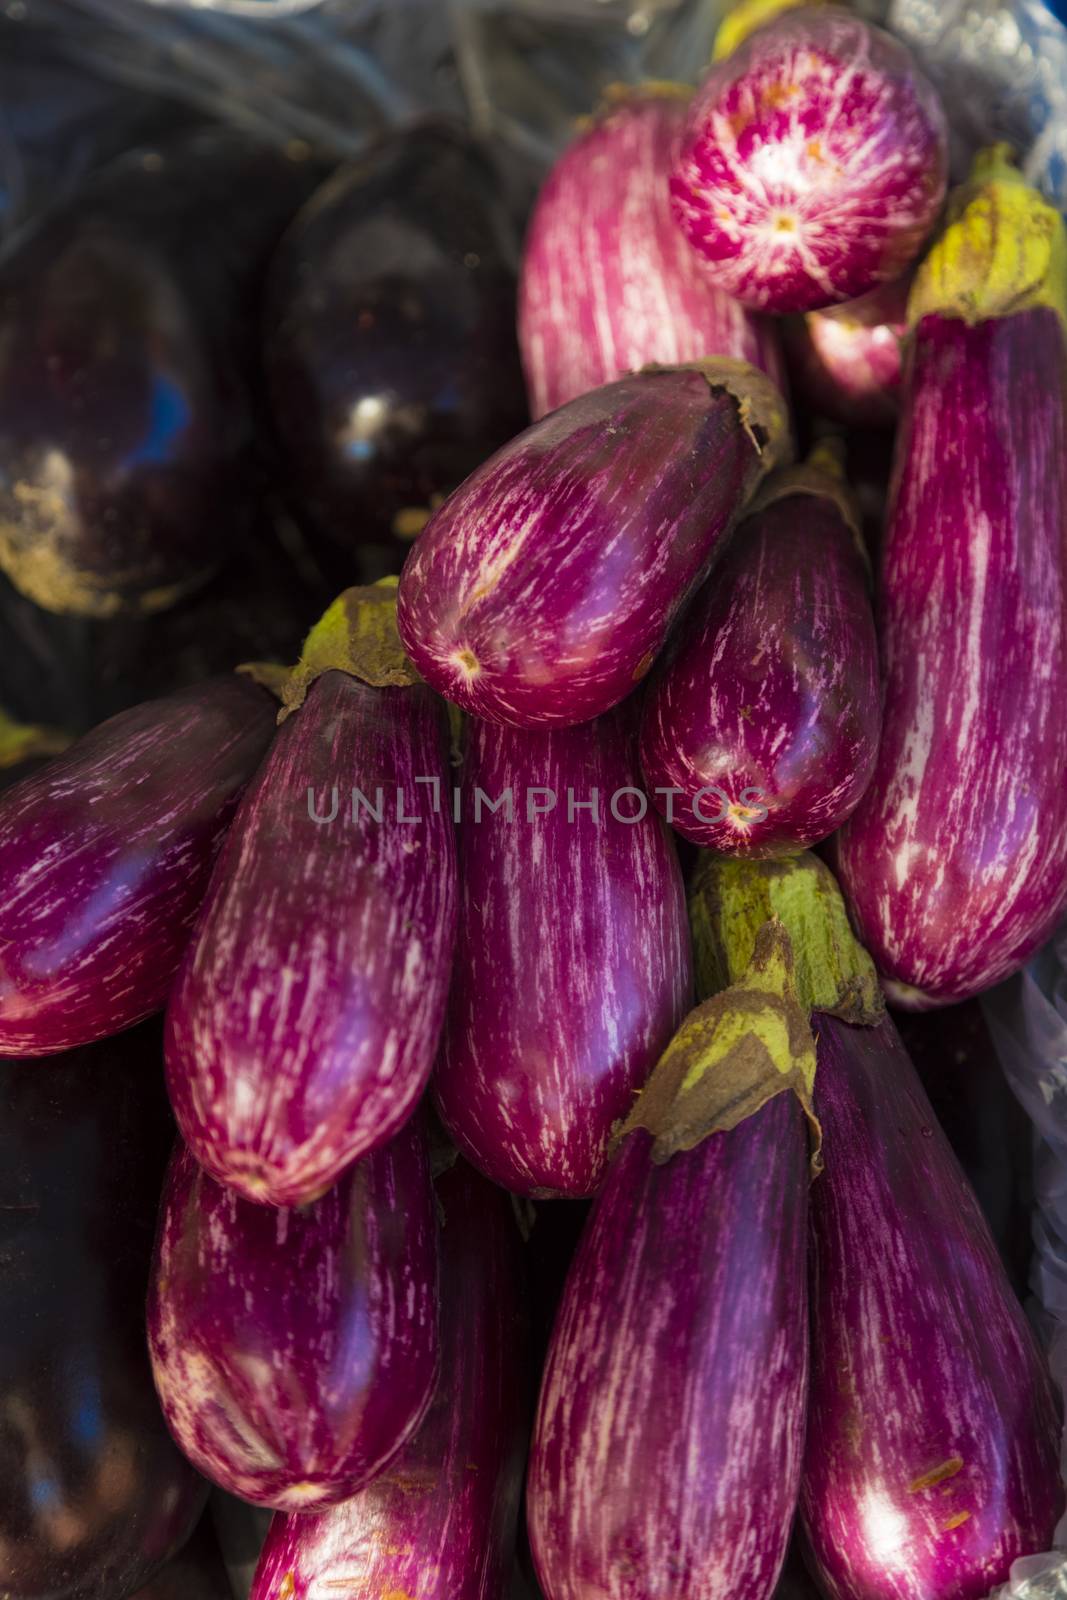 Zuchinni and eggplant  in a organic supermarket